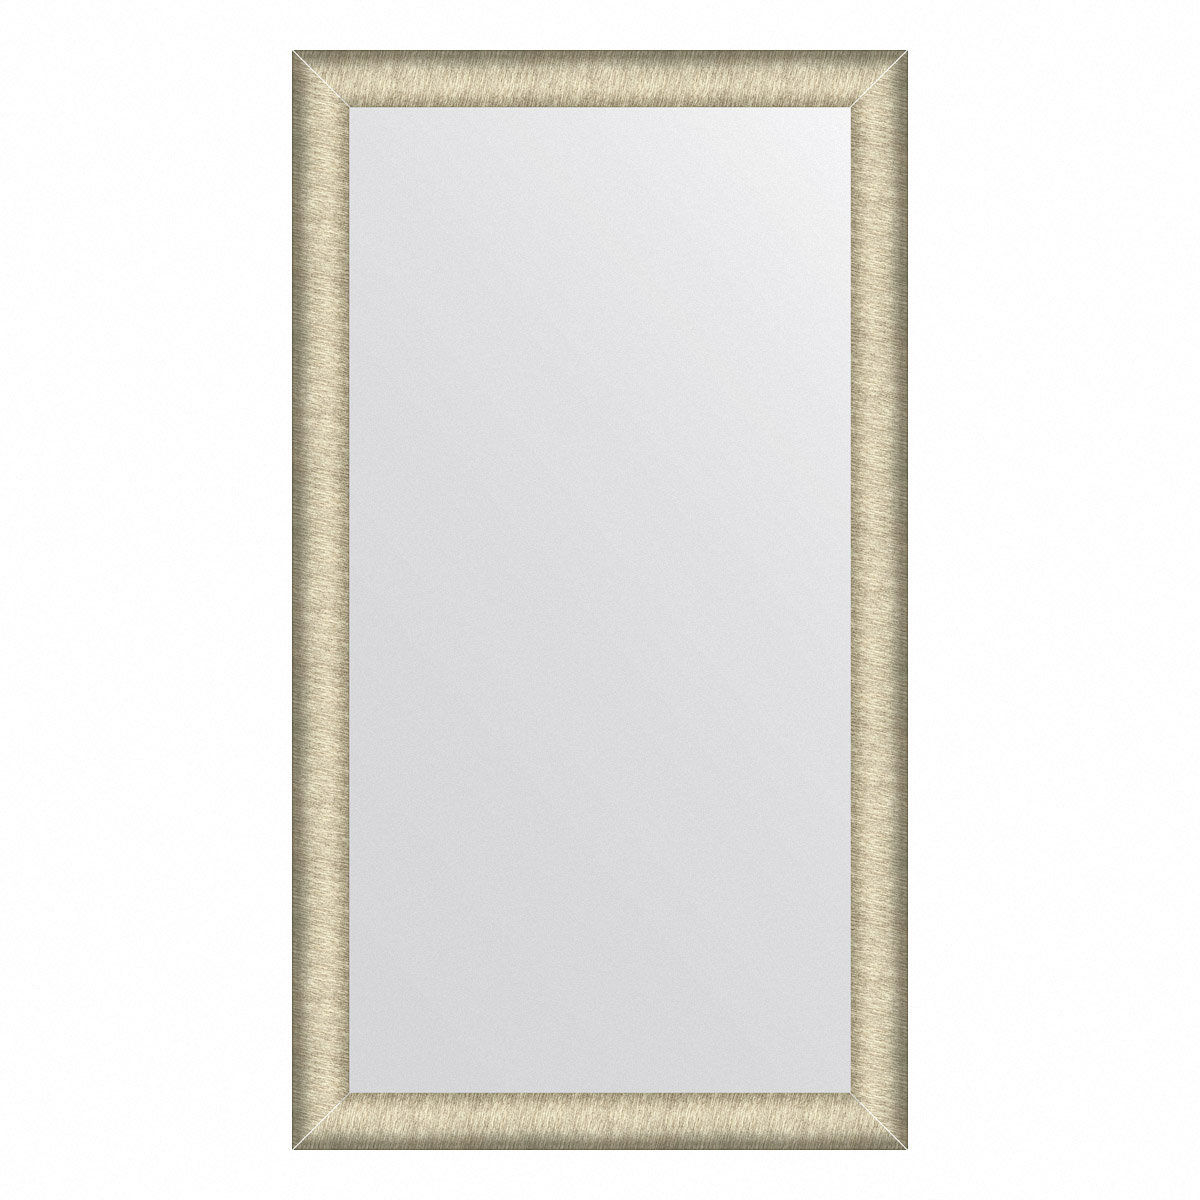 Зеркало в багетной раме Evoform DEFINITE BY 7609 